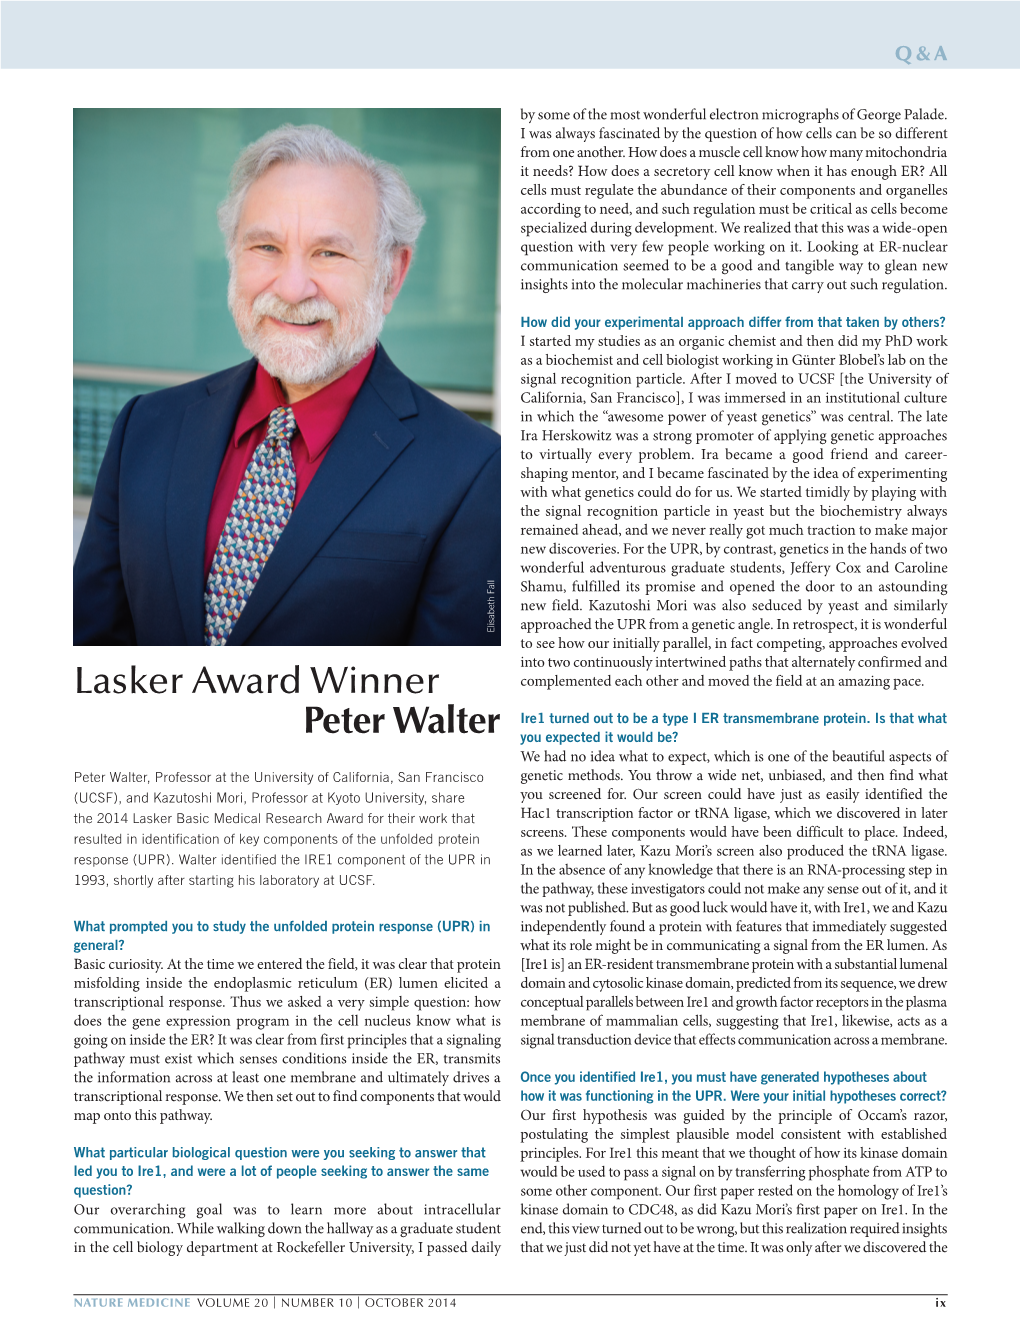 Lasker Award Winner Peter Walter